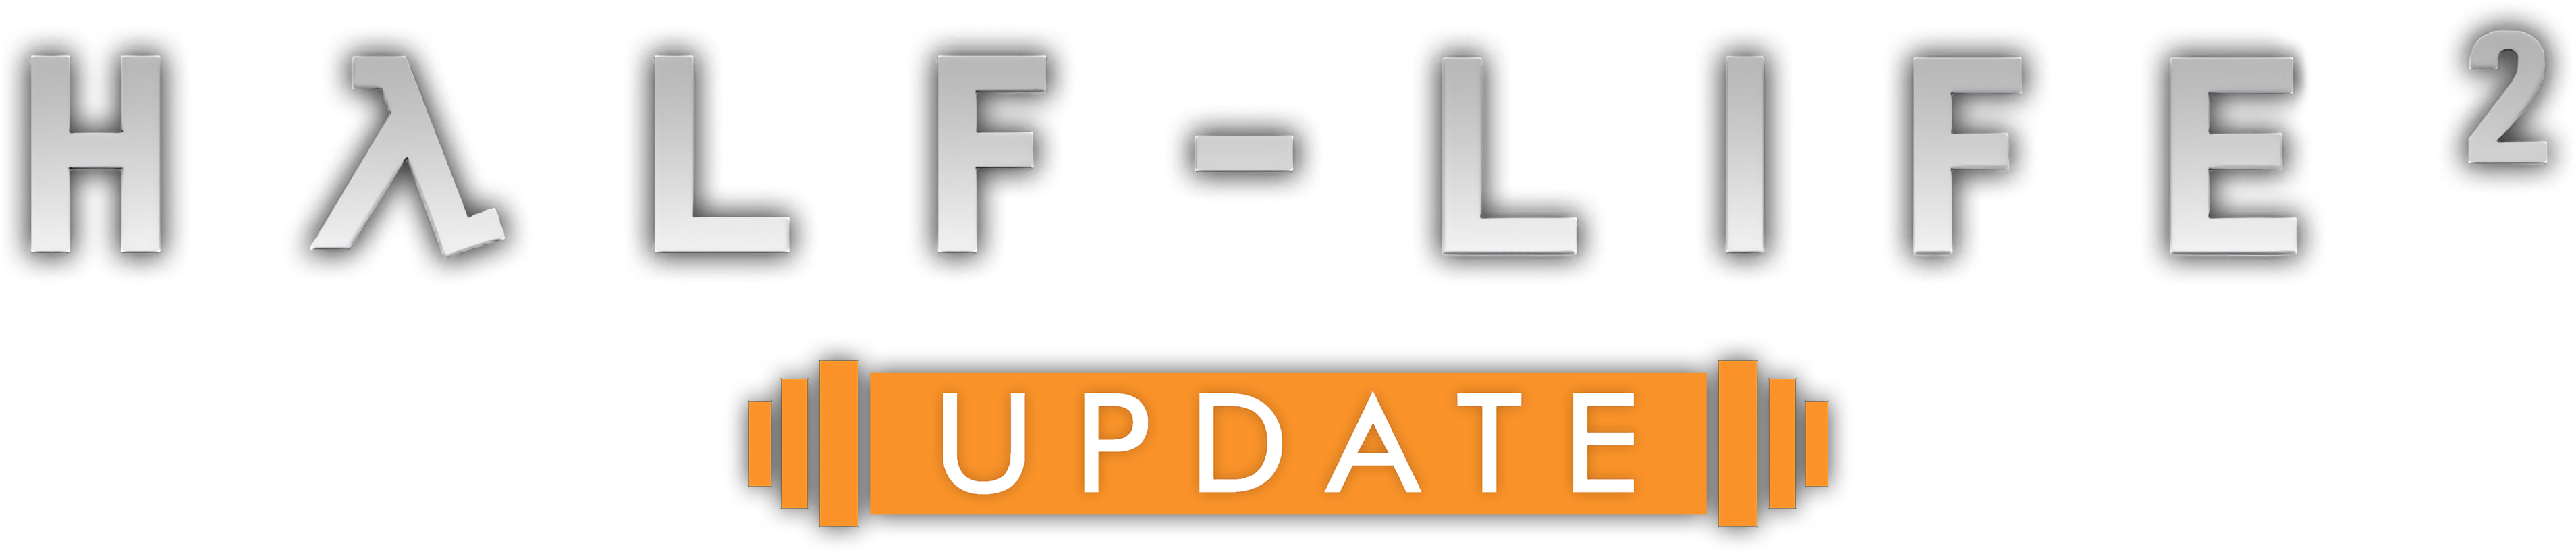 Half life название. Half Life 2 логотип. Half-Life 2: update логотип. Логотип hl2. Half Life 2 update logo.